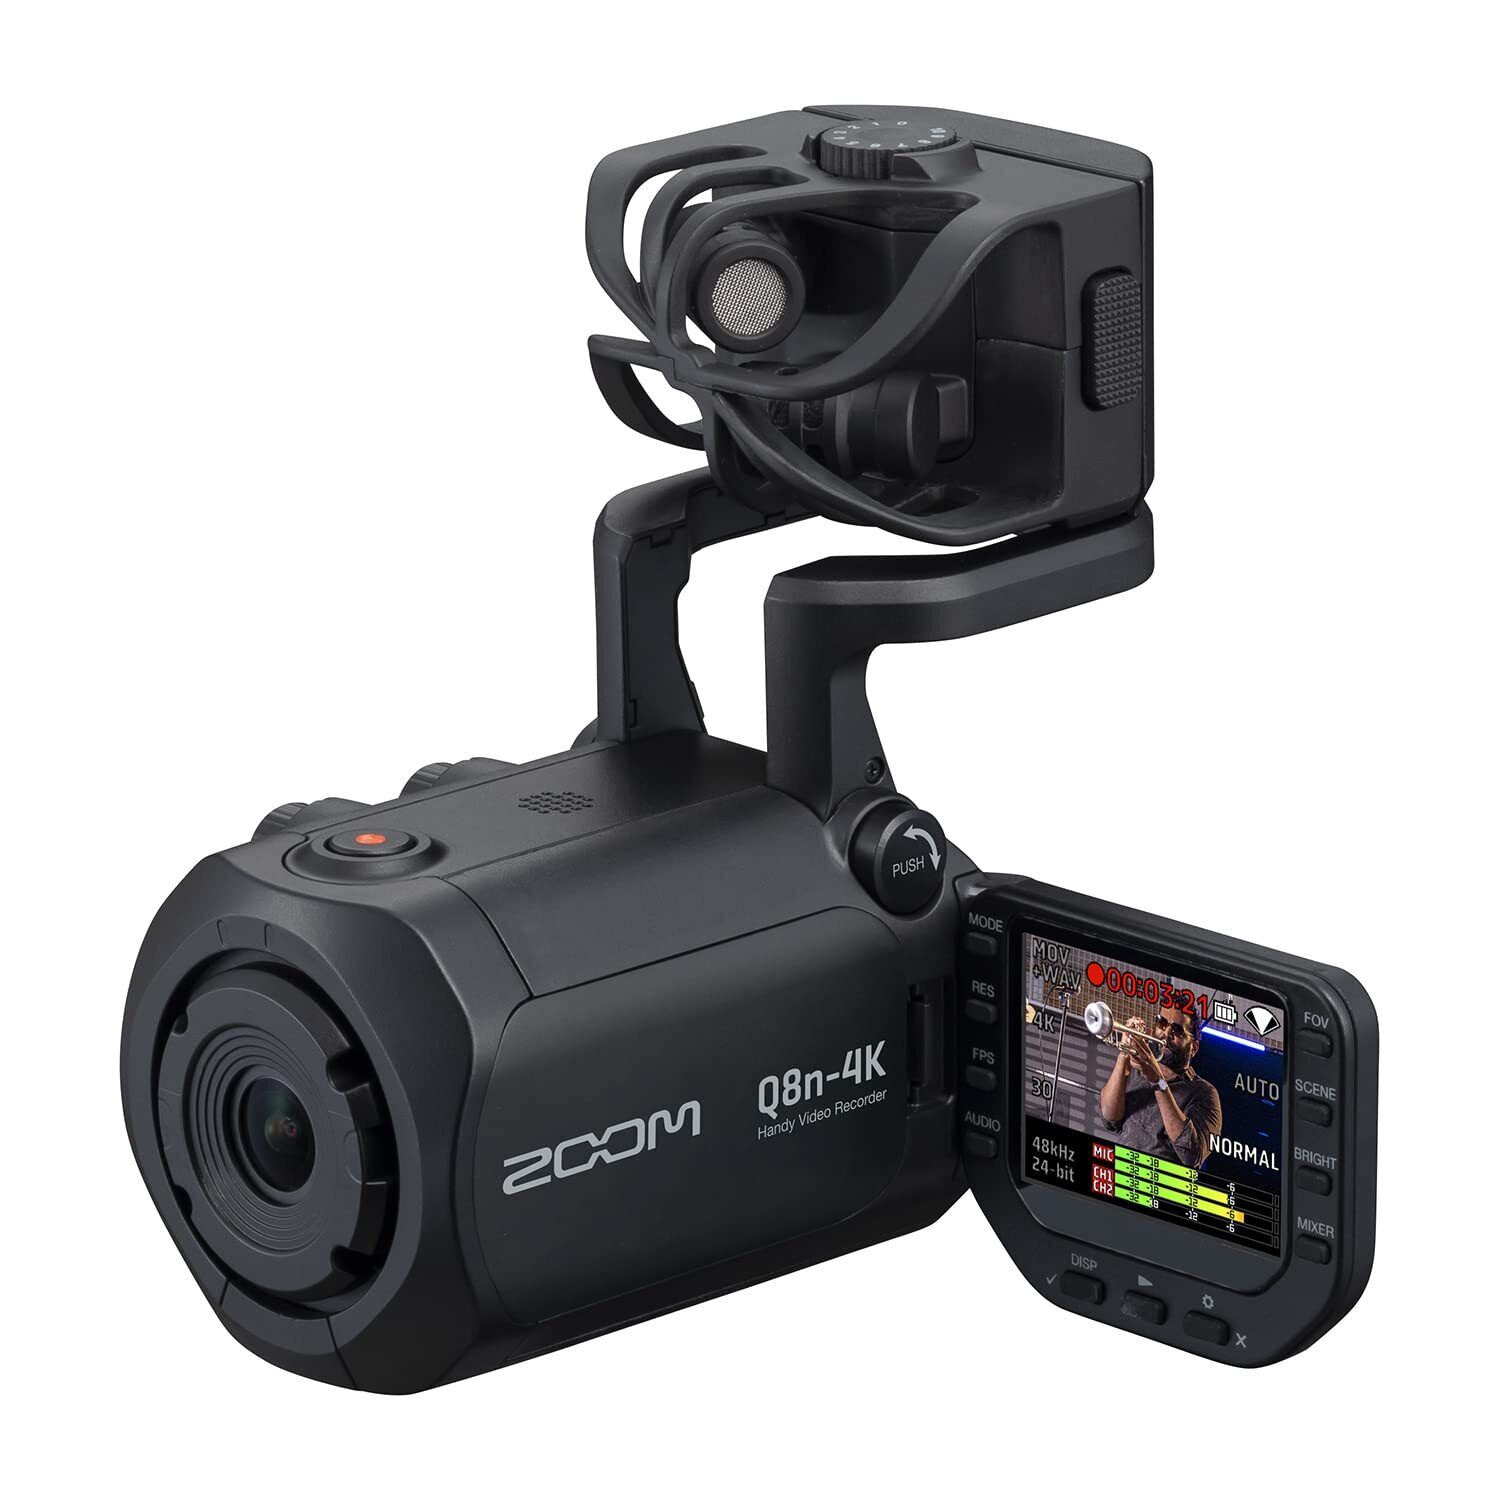 Zoom 4K Quality Handy Video Recorder For Cameras Q8n-4K black New 